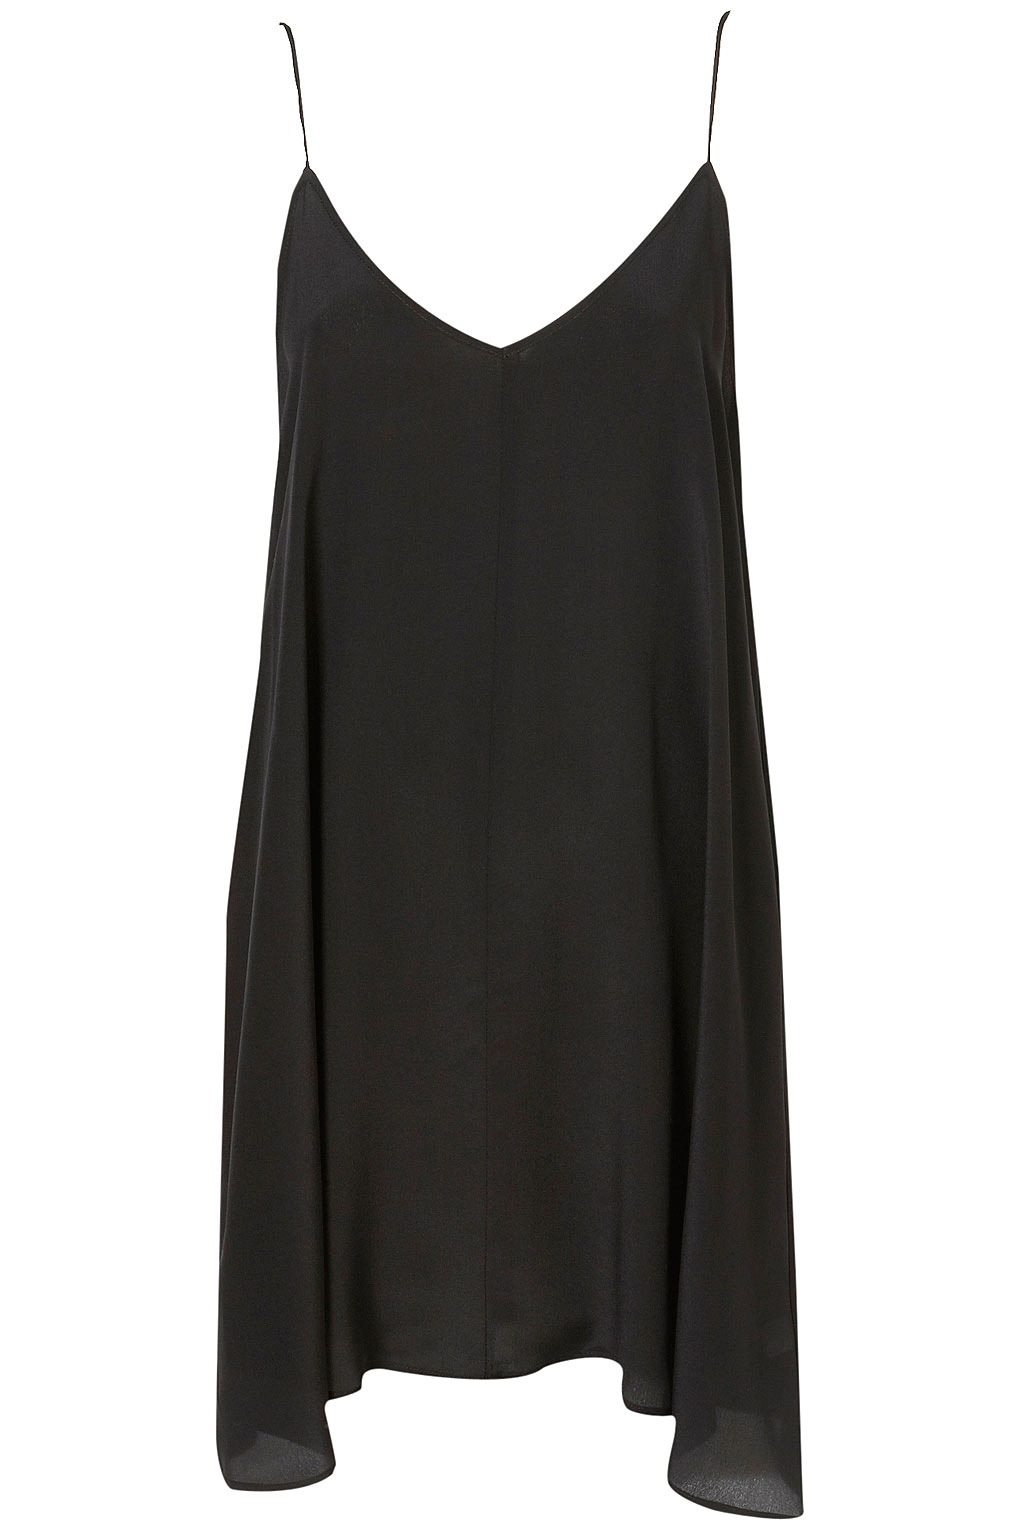 Lyst - Topshop Swing V Slip Dress By Boutique in Black